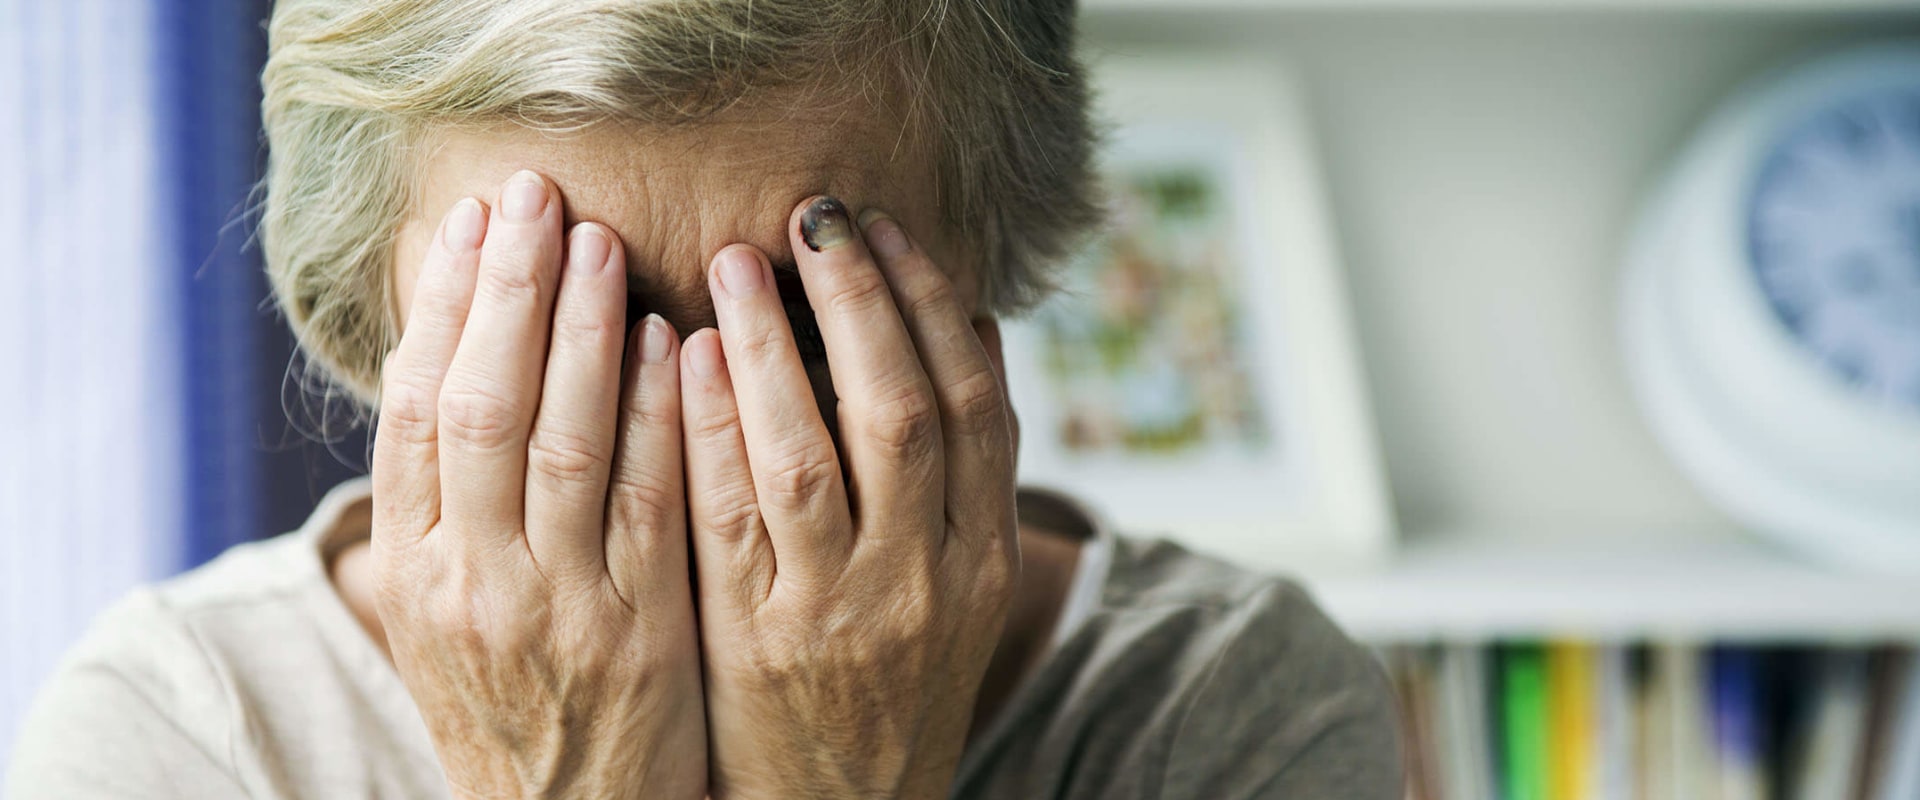 What is elder abuse coercion?